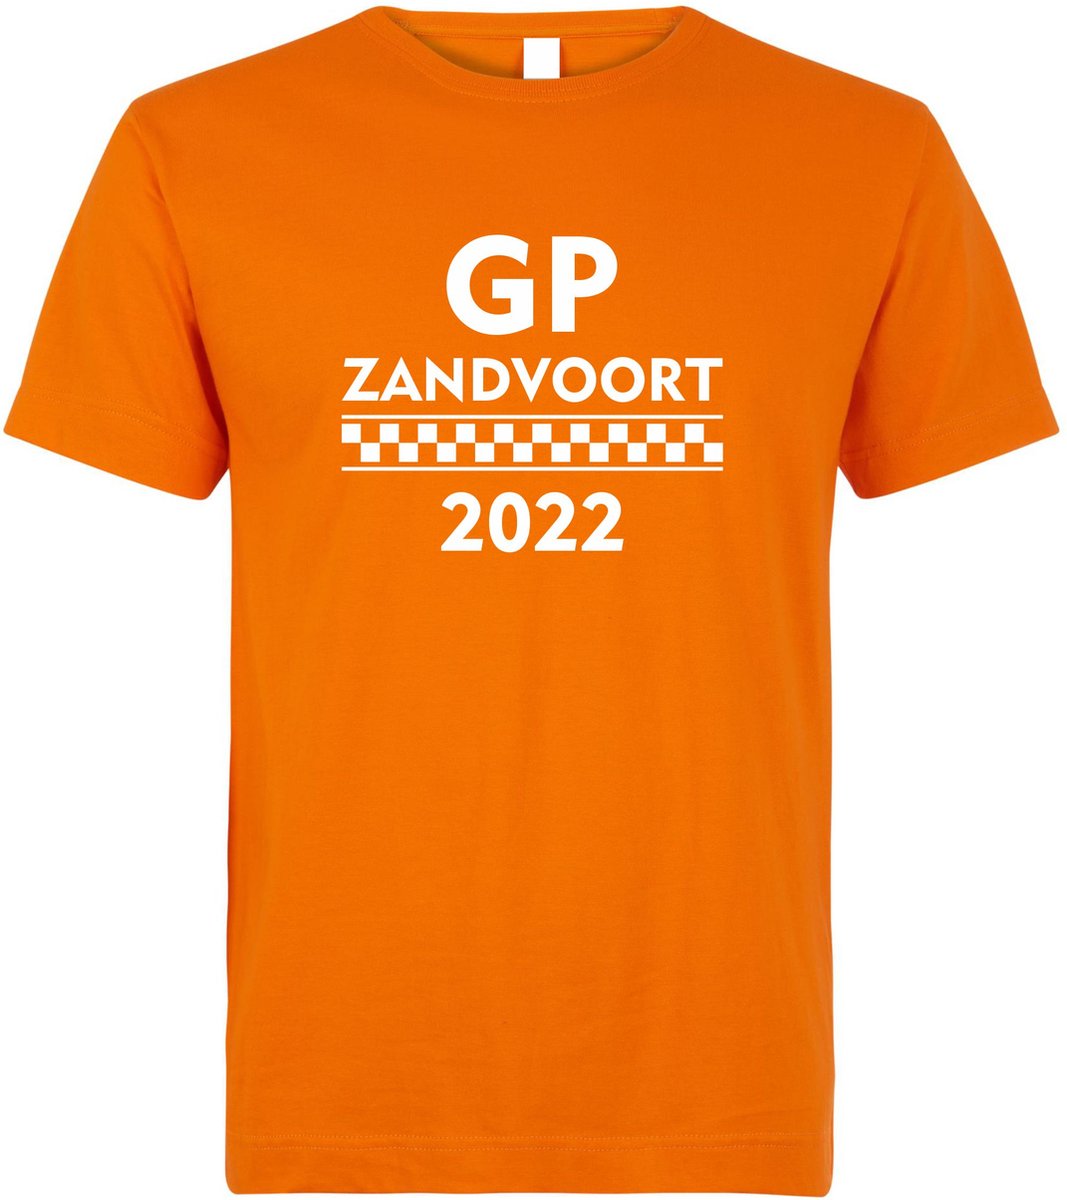 T-shirt GP Zandvoort 2022 | Max Verstappen / Red Bull Racing / Formule 1 fan | Grand Prix Circuit Zandvoort | kleding shirt | Oranje | maat 4XL